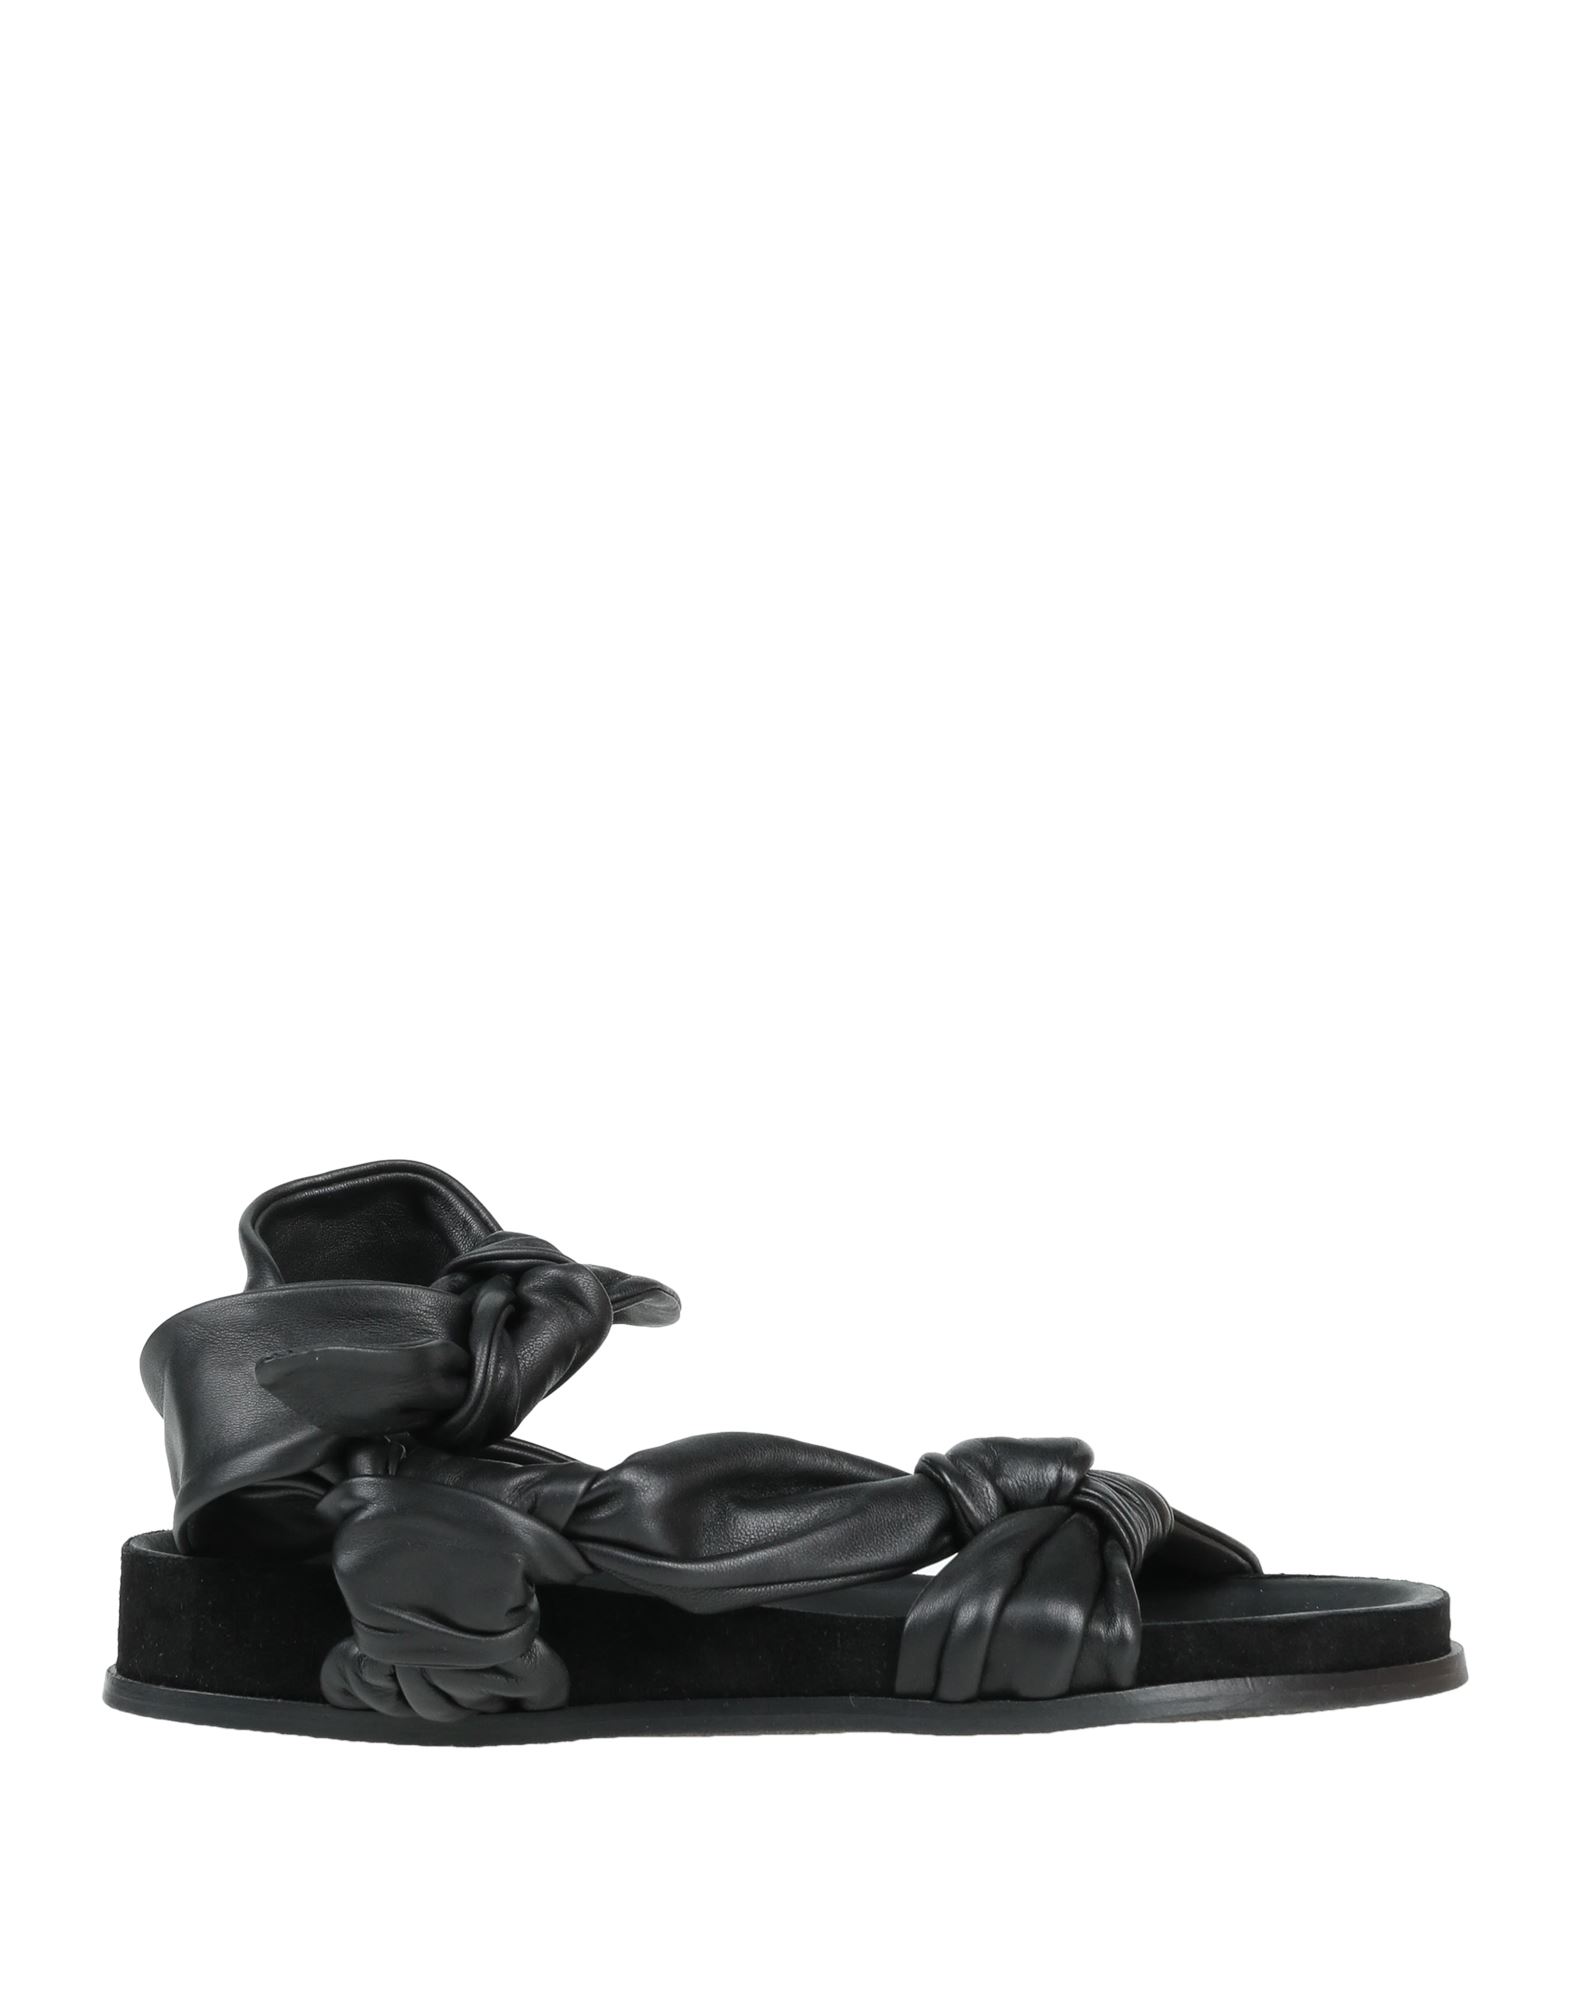 Ba&sh Sandals In Black